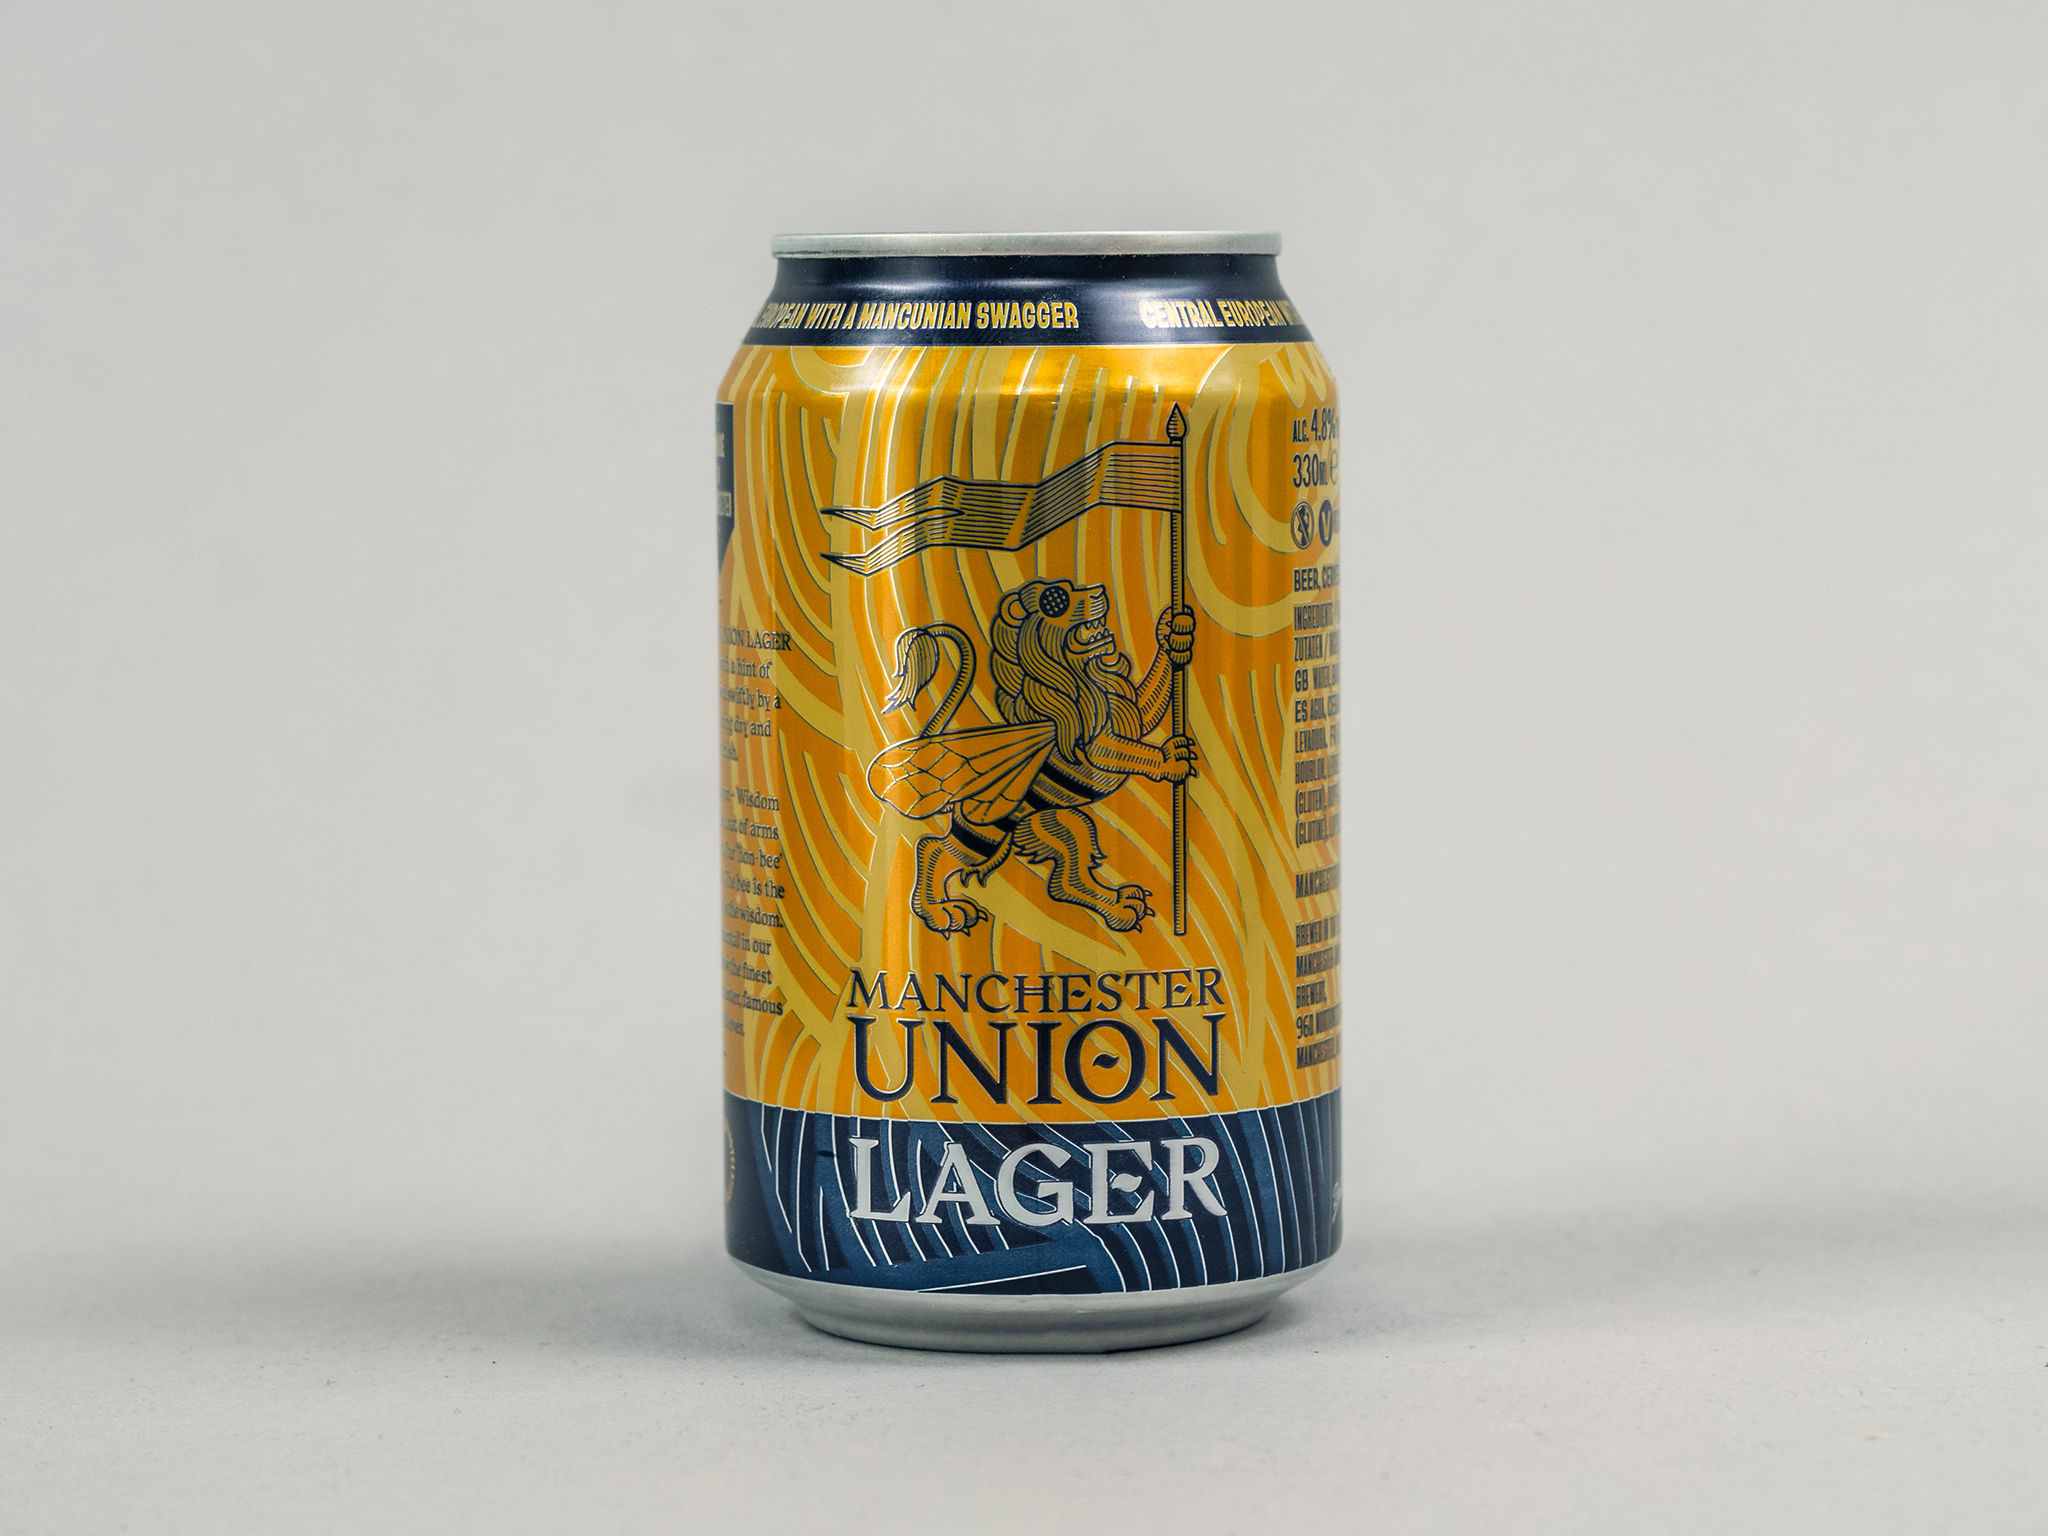 Manchestere Union dark lager